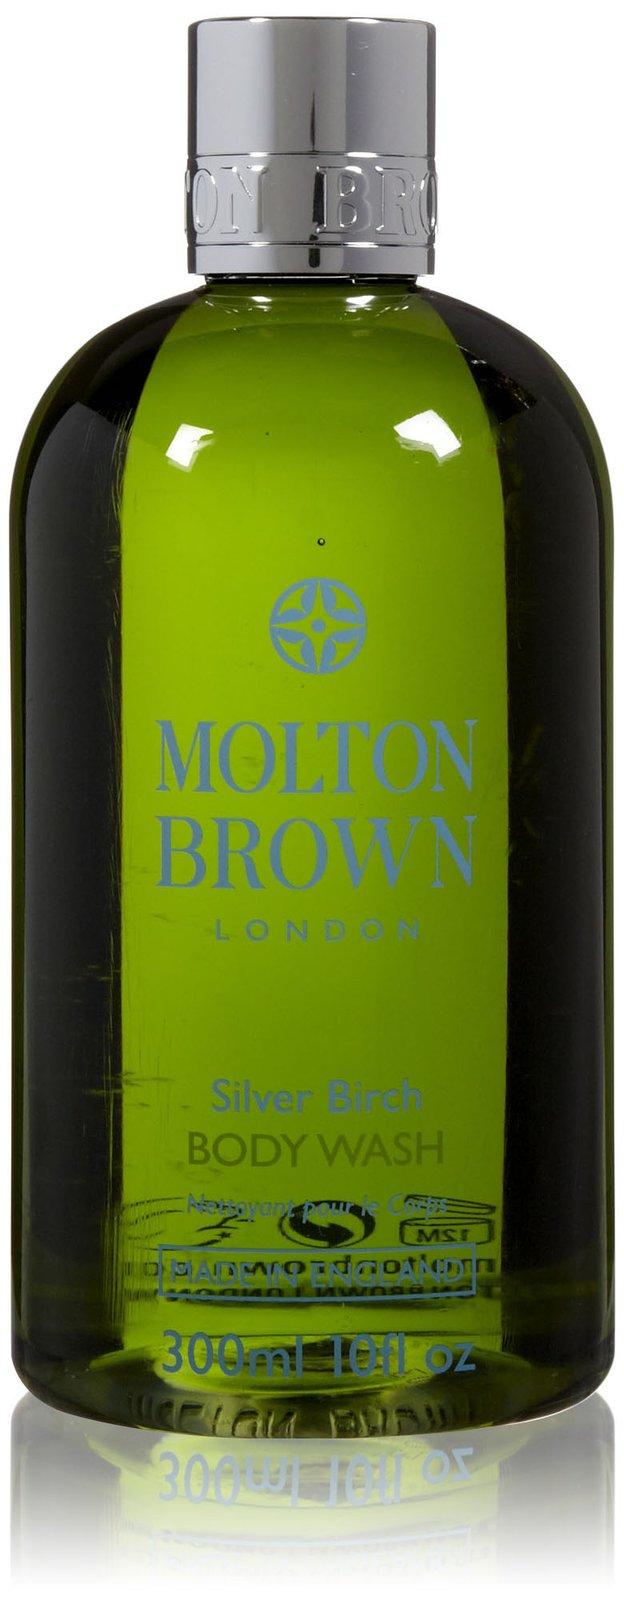 Molton Brown Body Wash - Silverbirch - 10 Oz